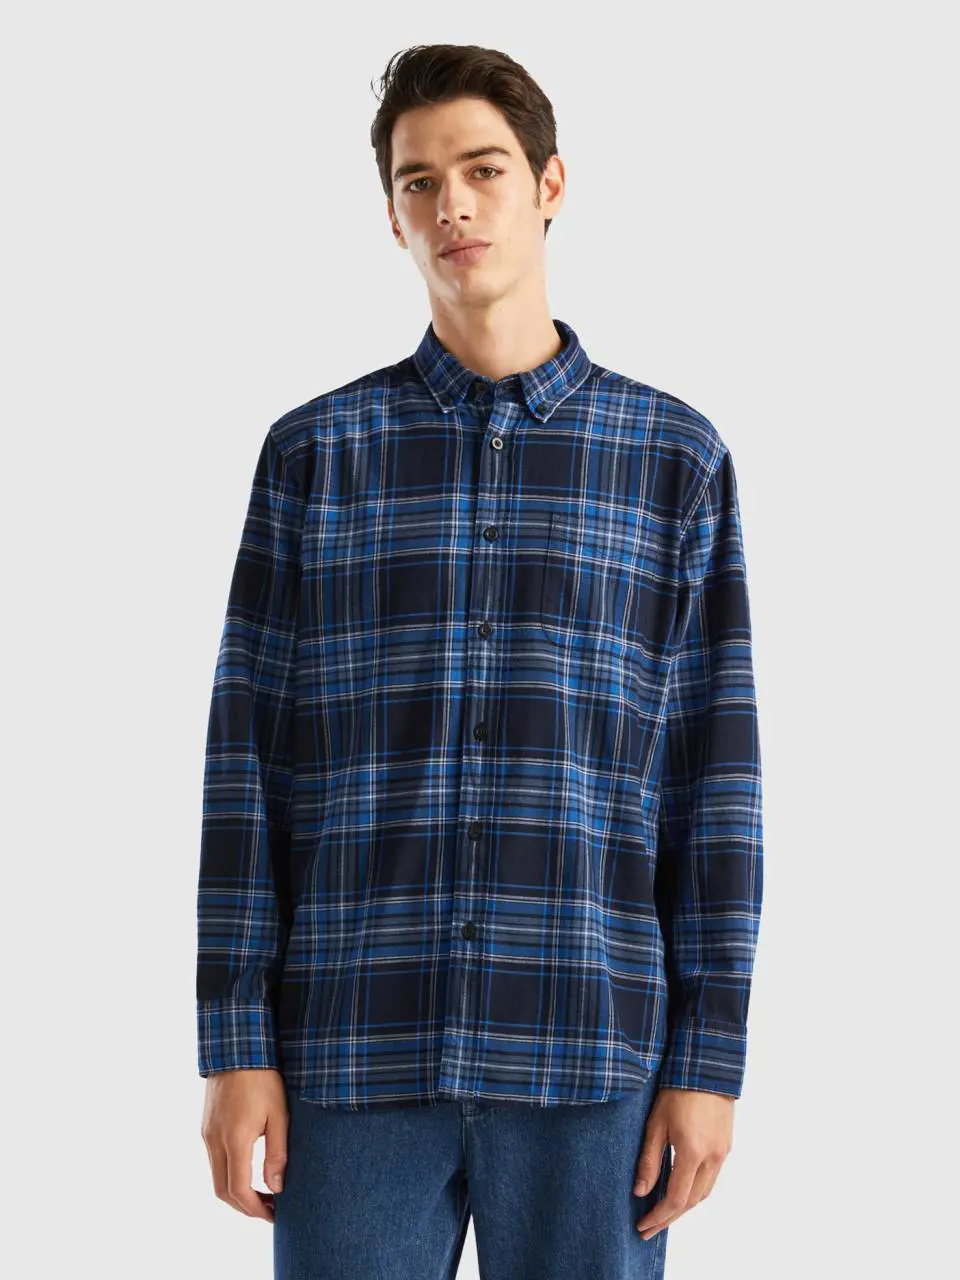 Benetton check flannel shirt. 1